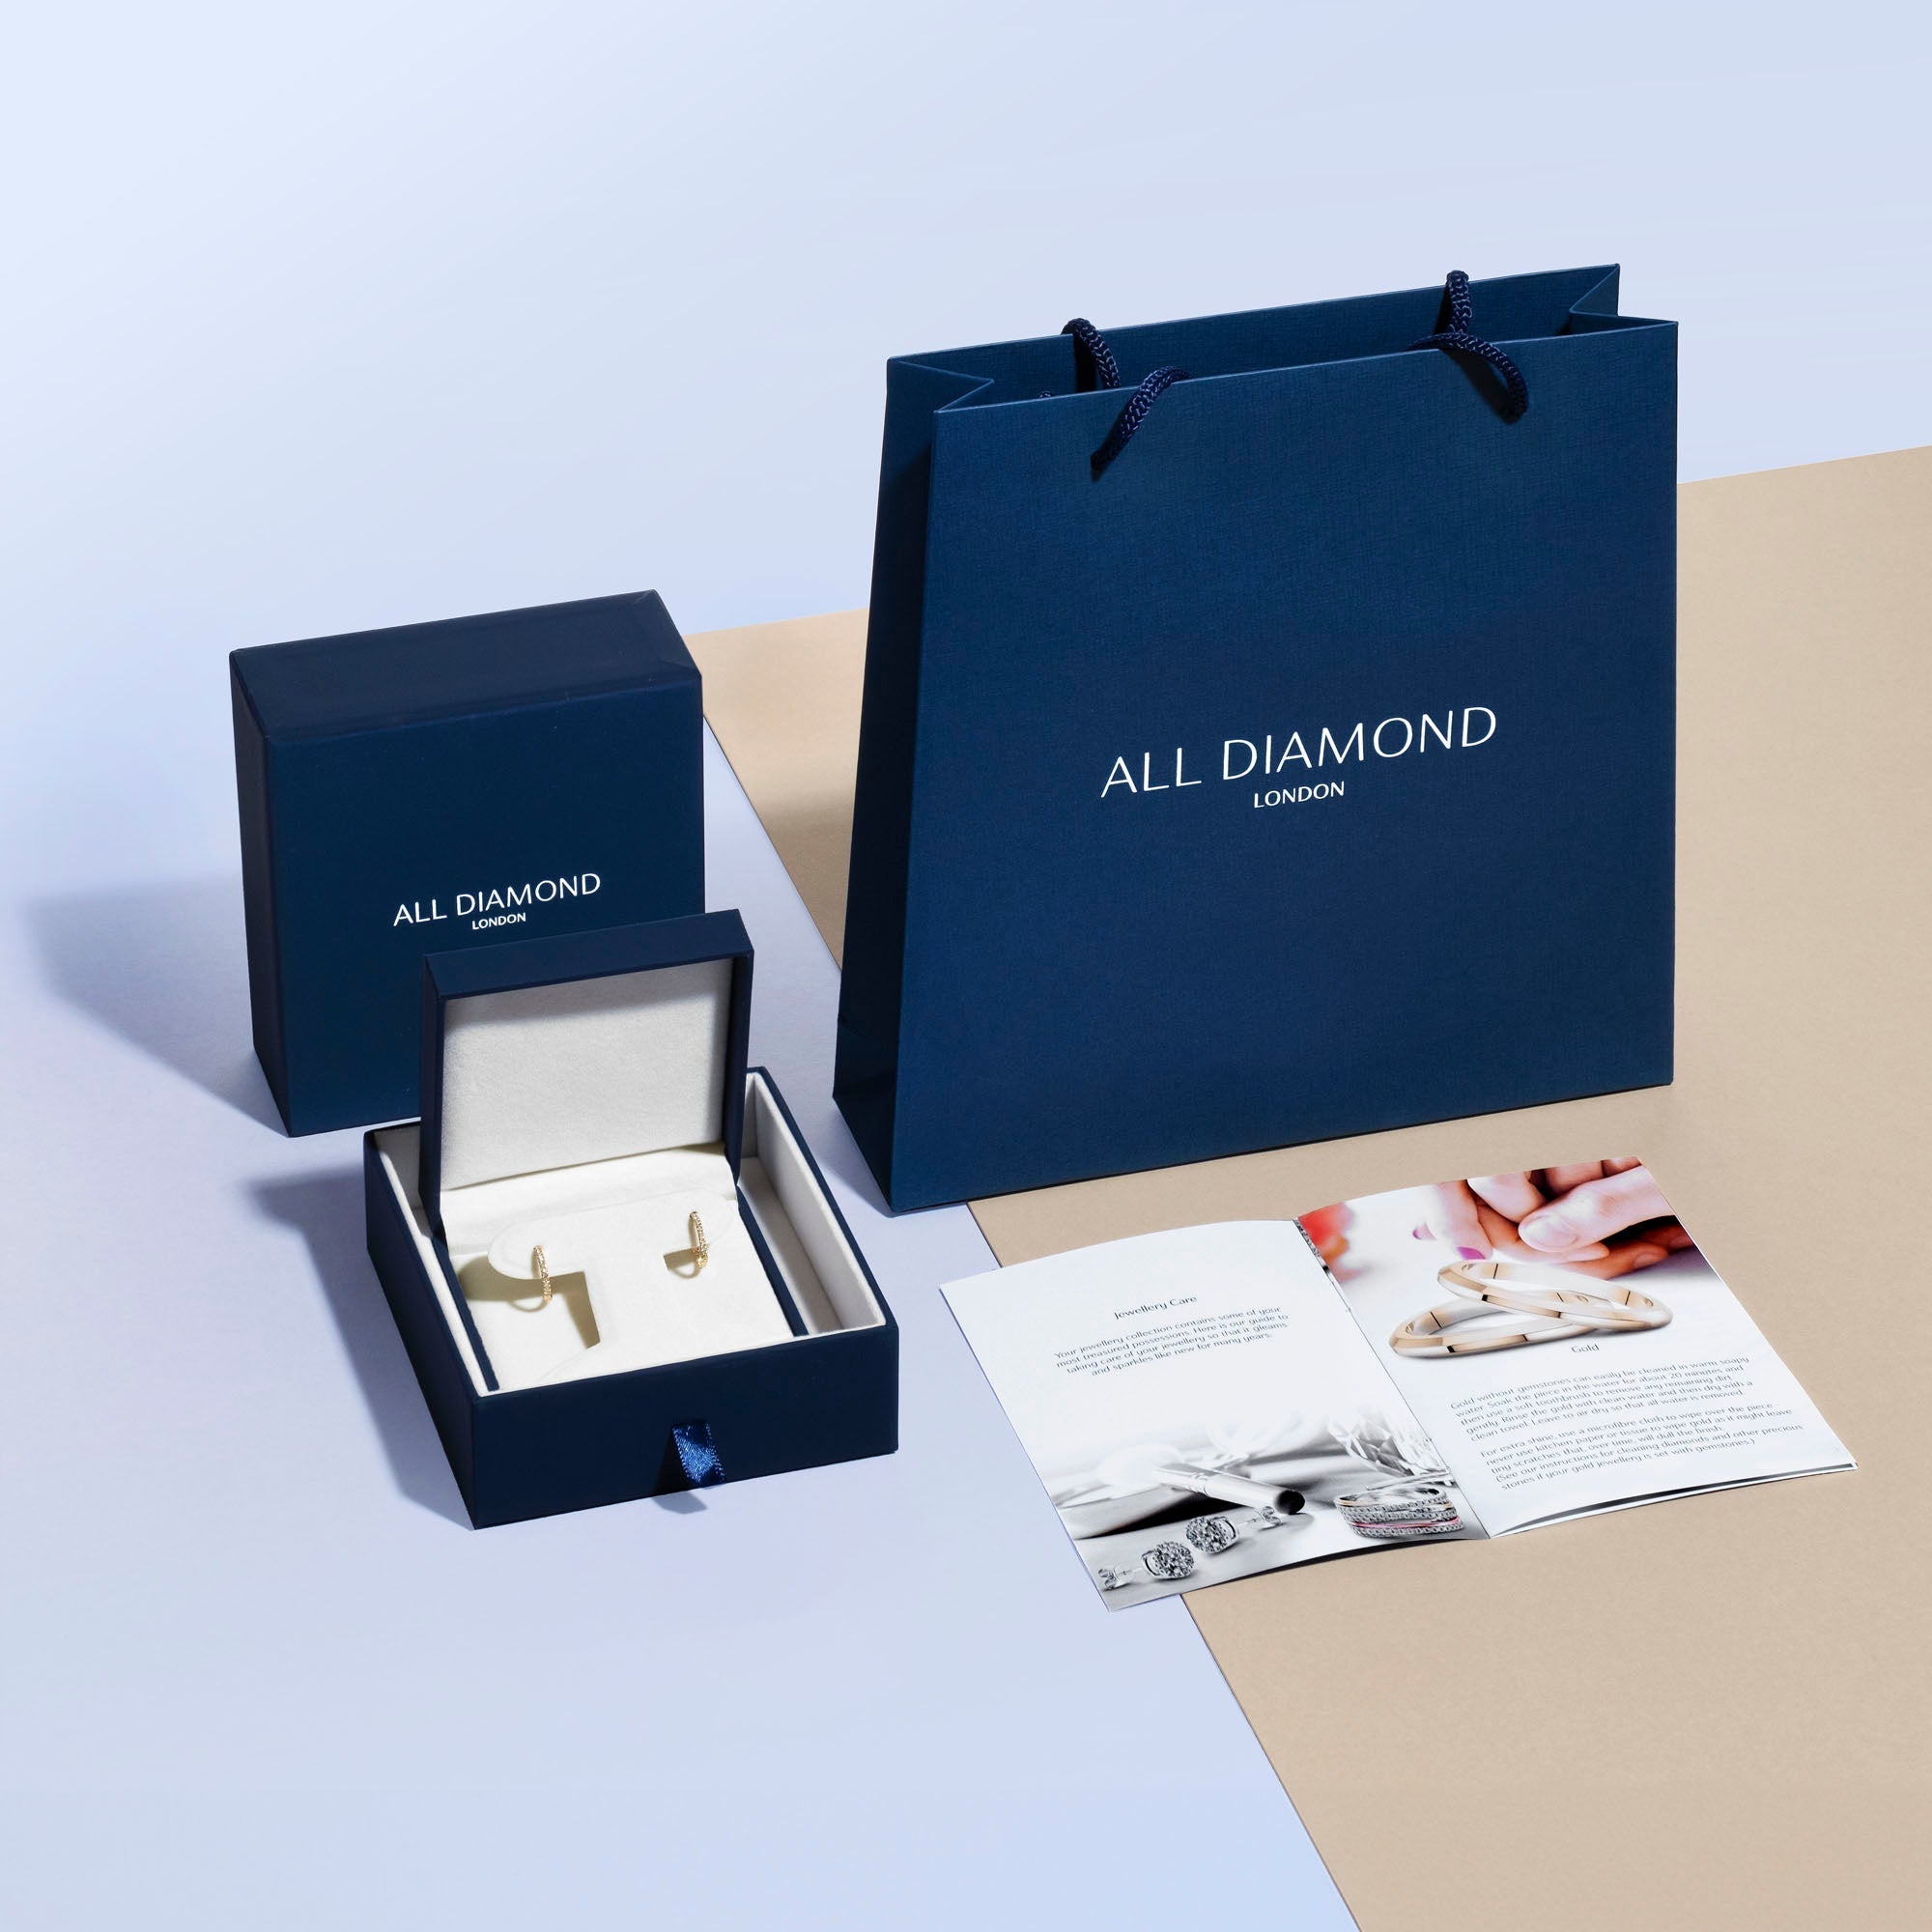 Daisy Diamond Cluster Earrings 0.25ct G/SI in 18k White Gold - All Diamond